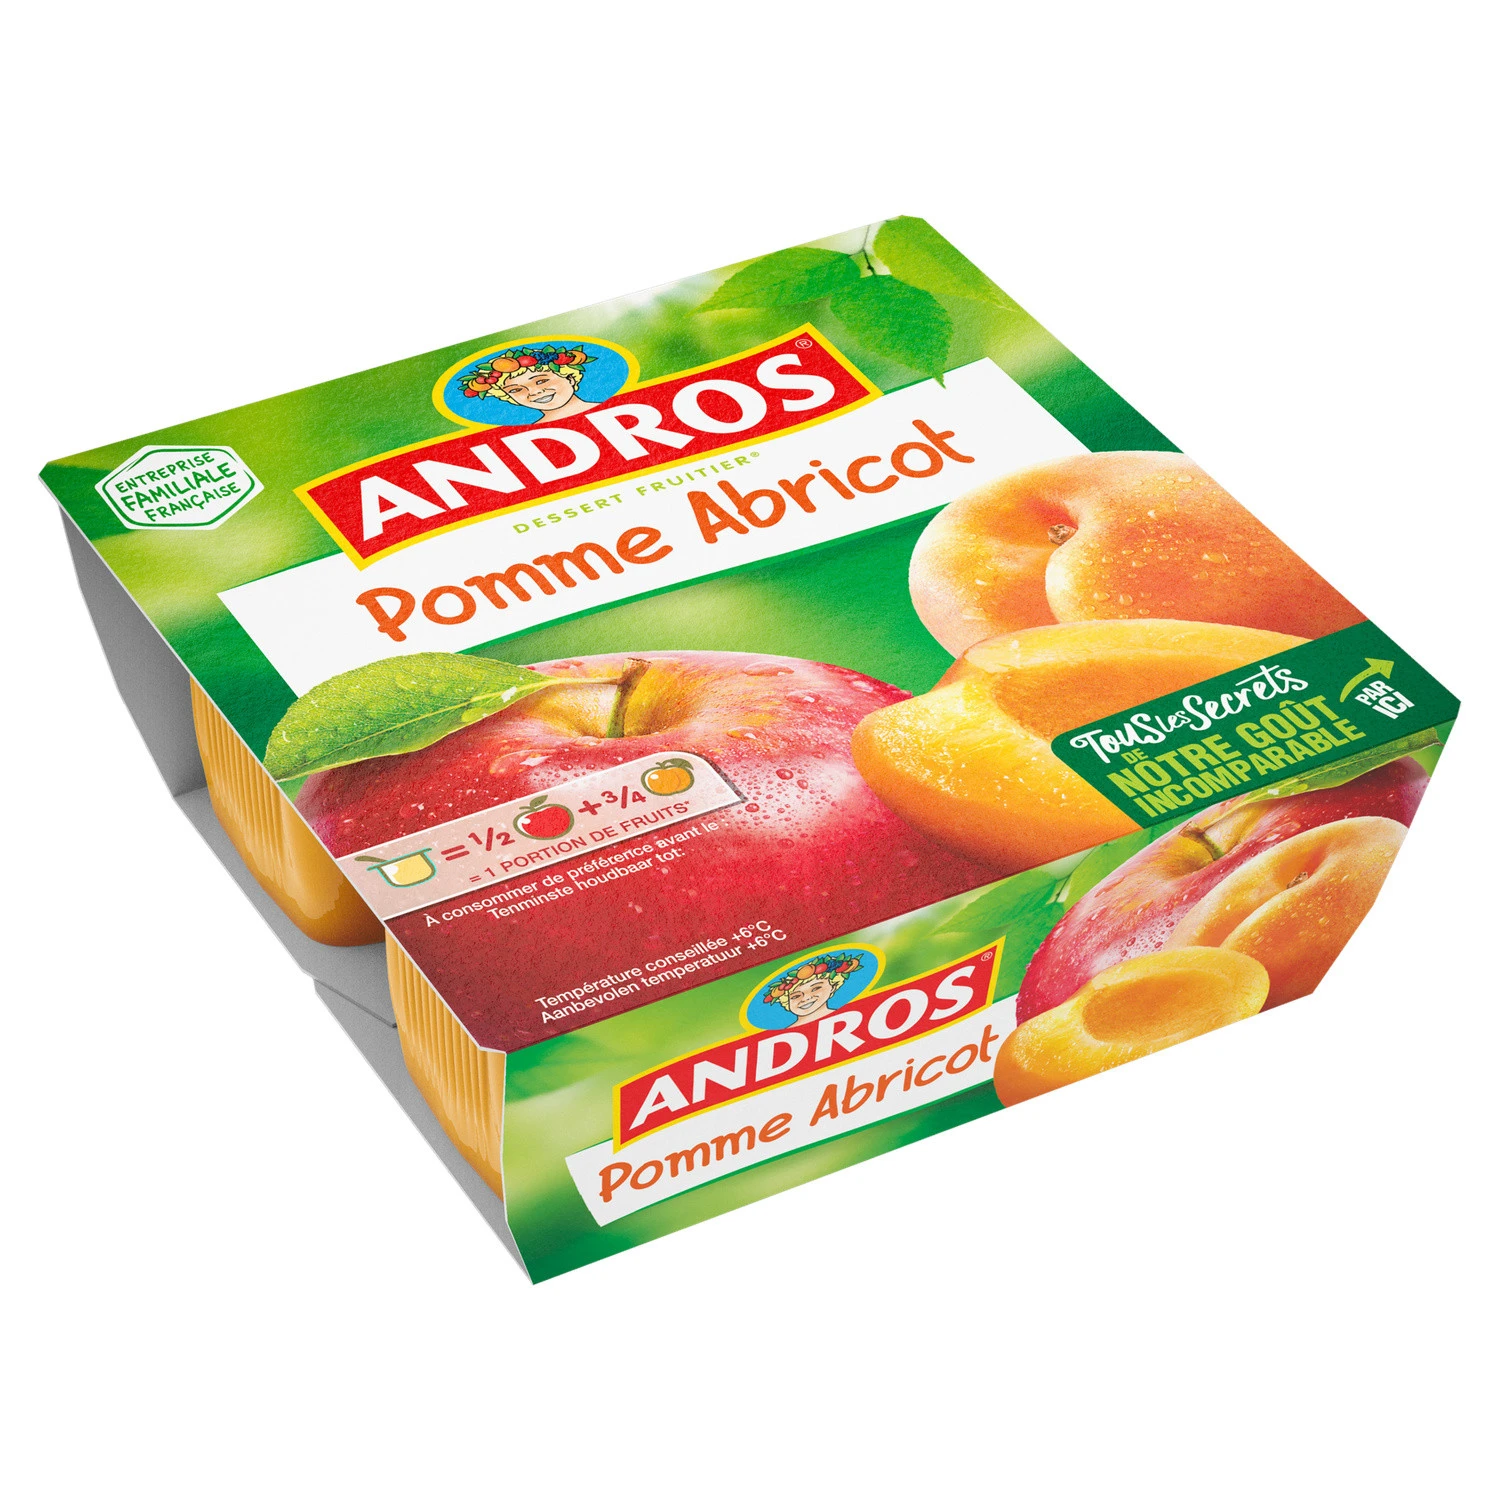 Andros Apple & Apricot dessert 4x100g